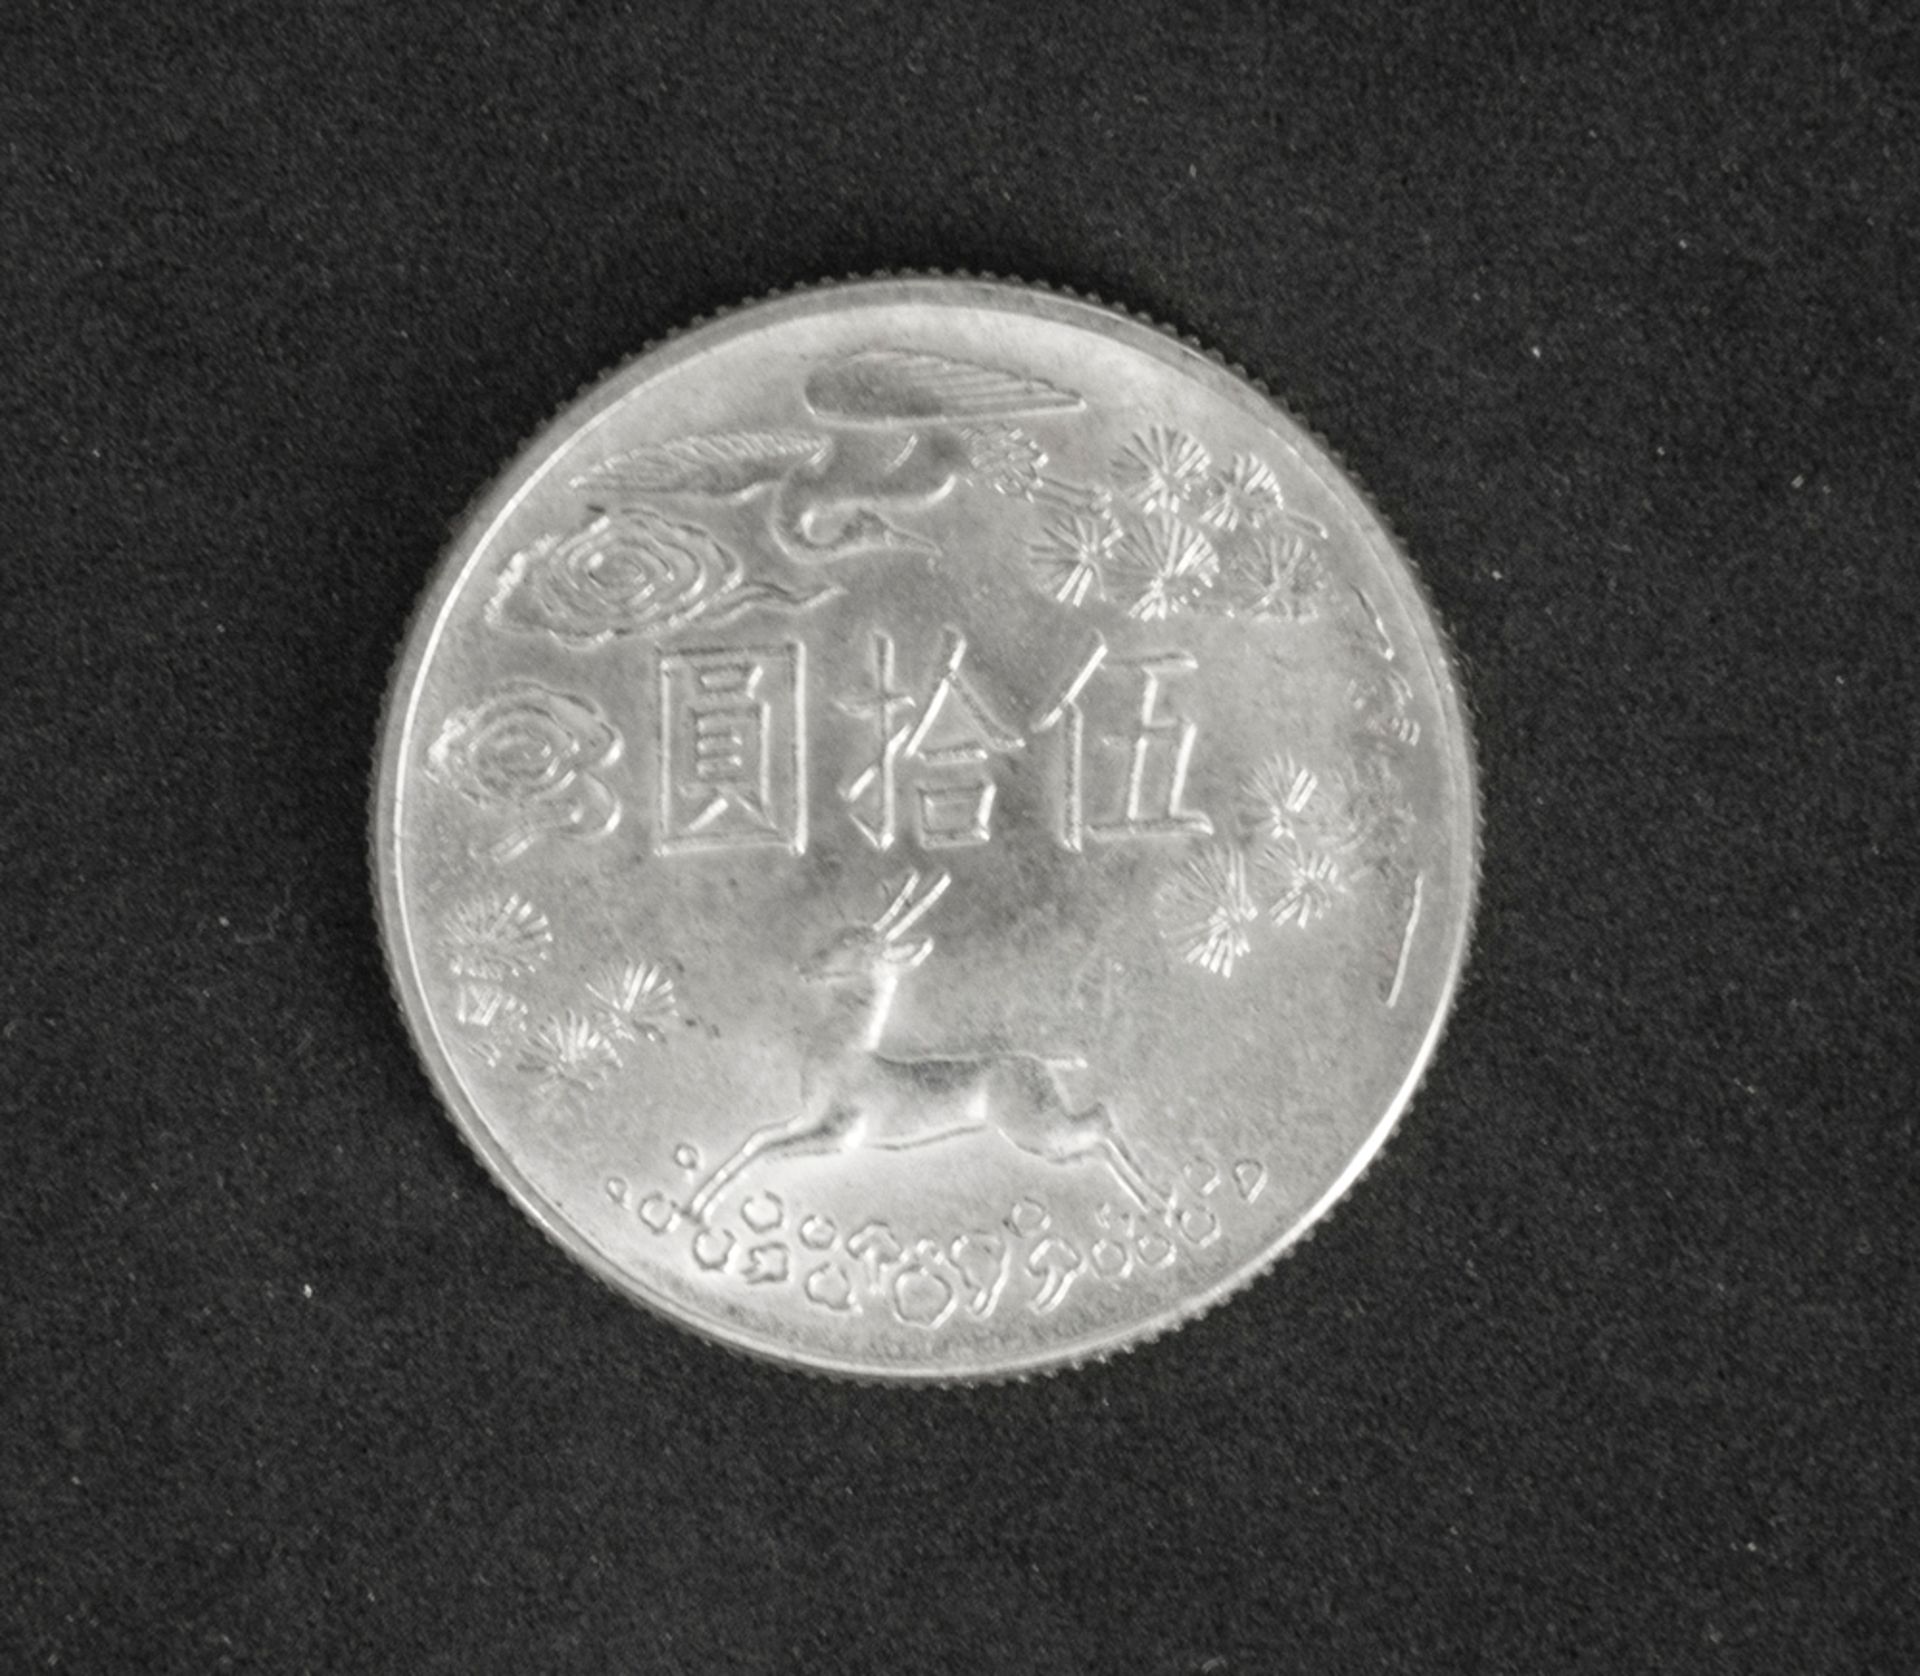 Taiwan 1965, 50 Dollar - Silbermünze. Erhaltung: ss. - Image 2 of 2